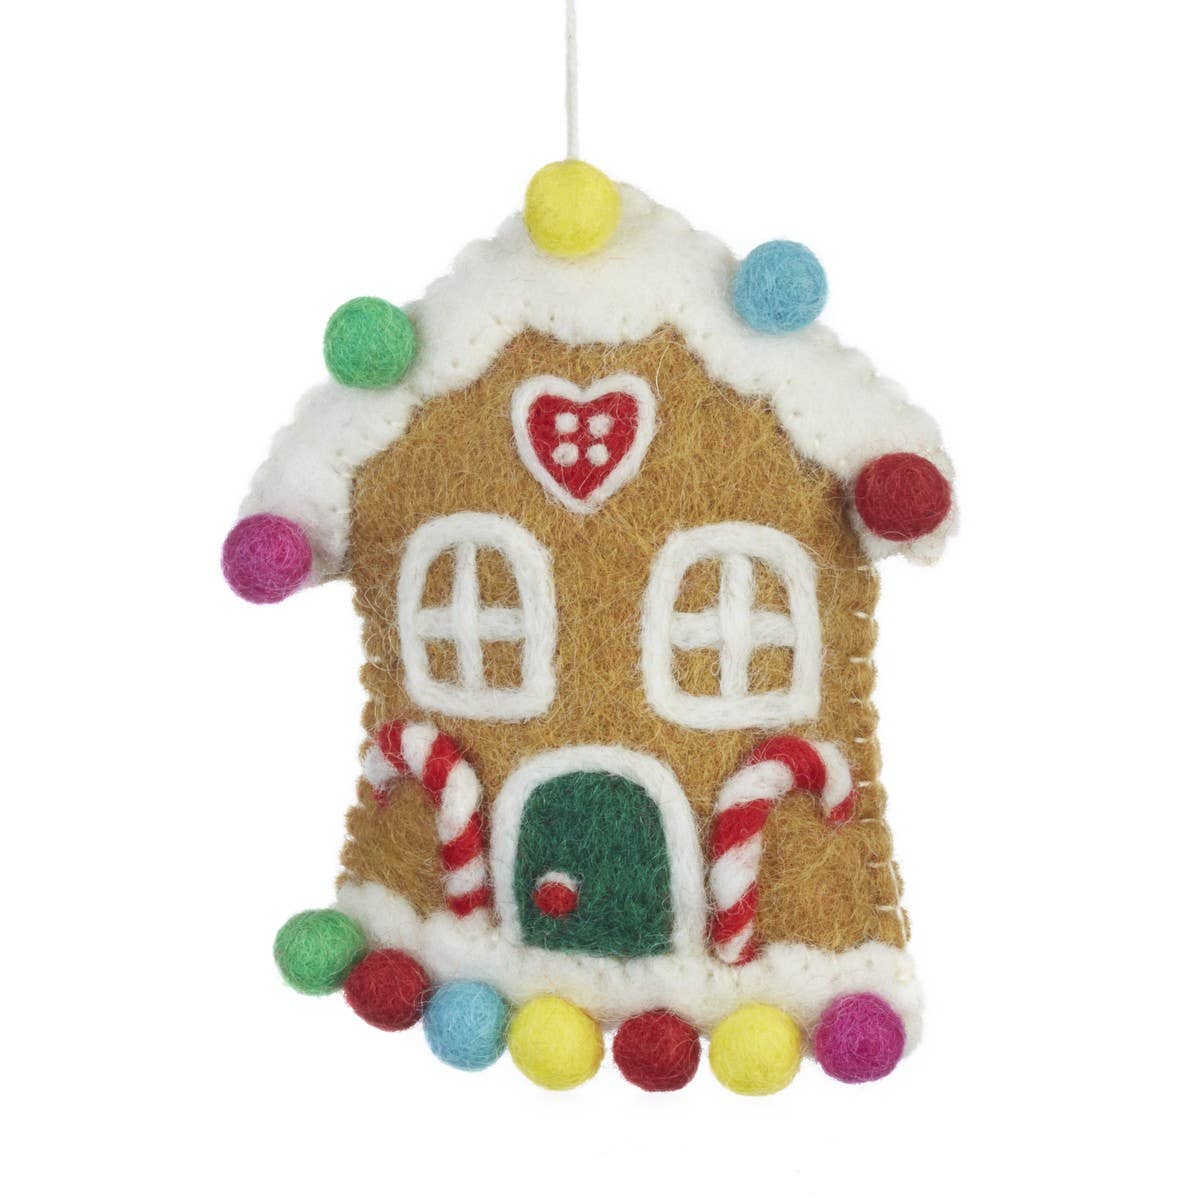 Handmade Felt Gingerbread House Ornament